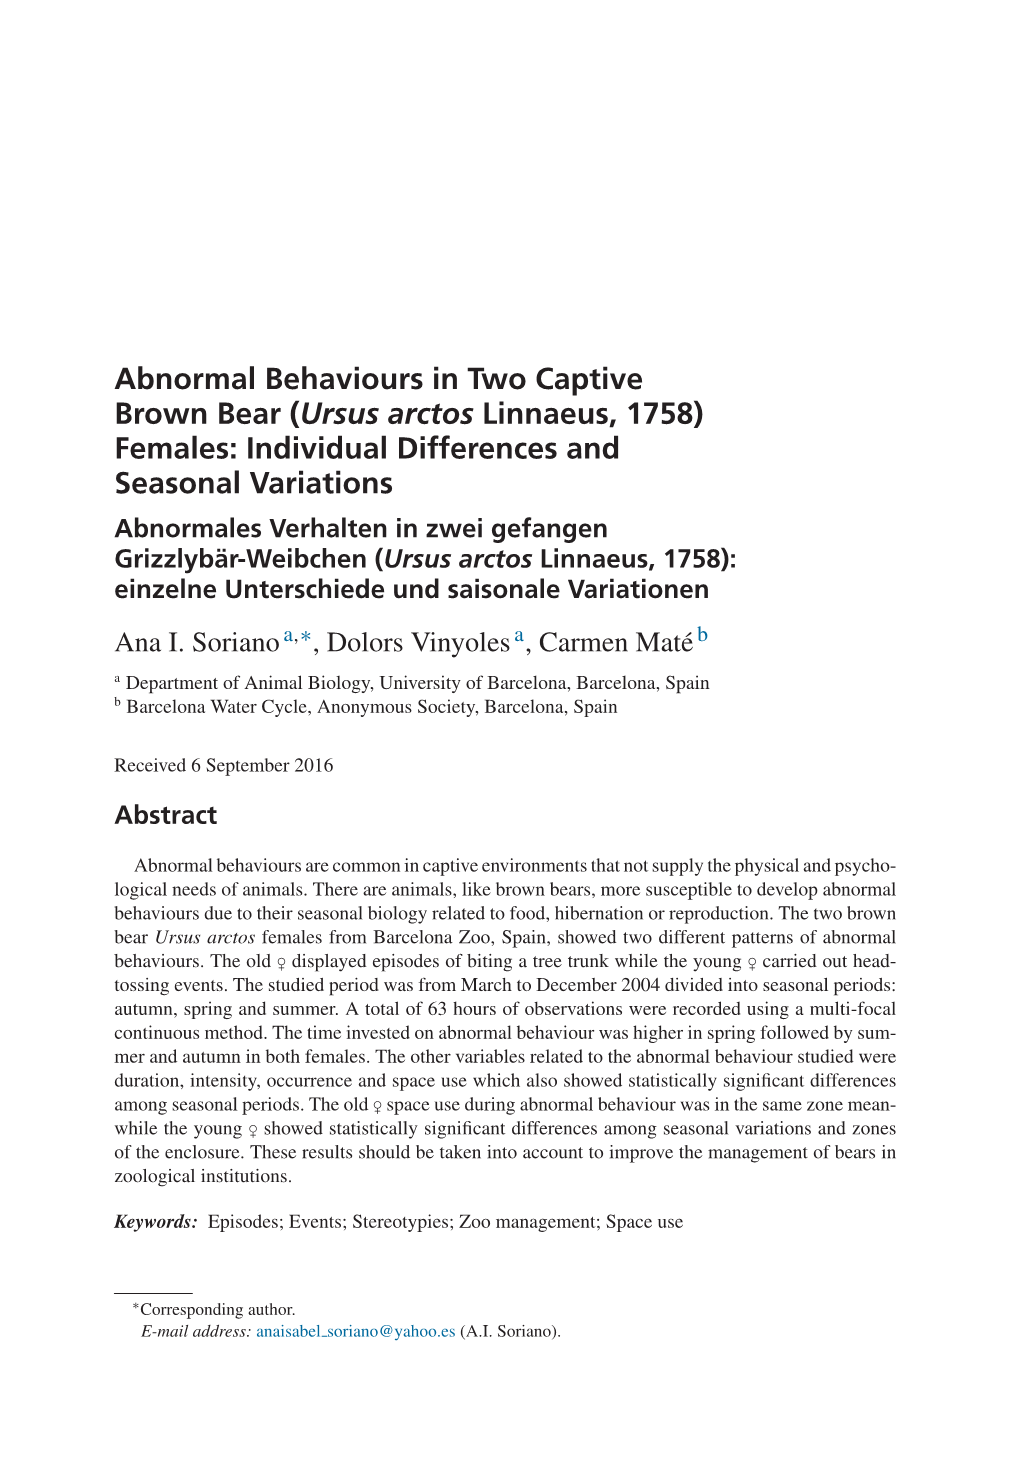 Abnormal Behaviours in Two Captive Brown Bear (Ursus Arctos Linnaeus